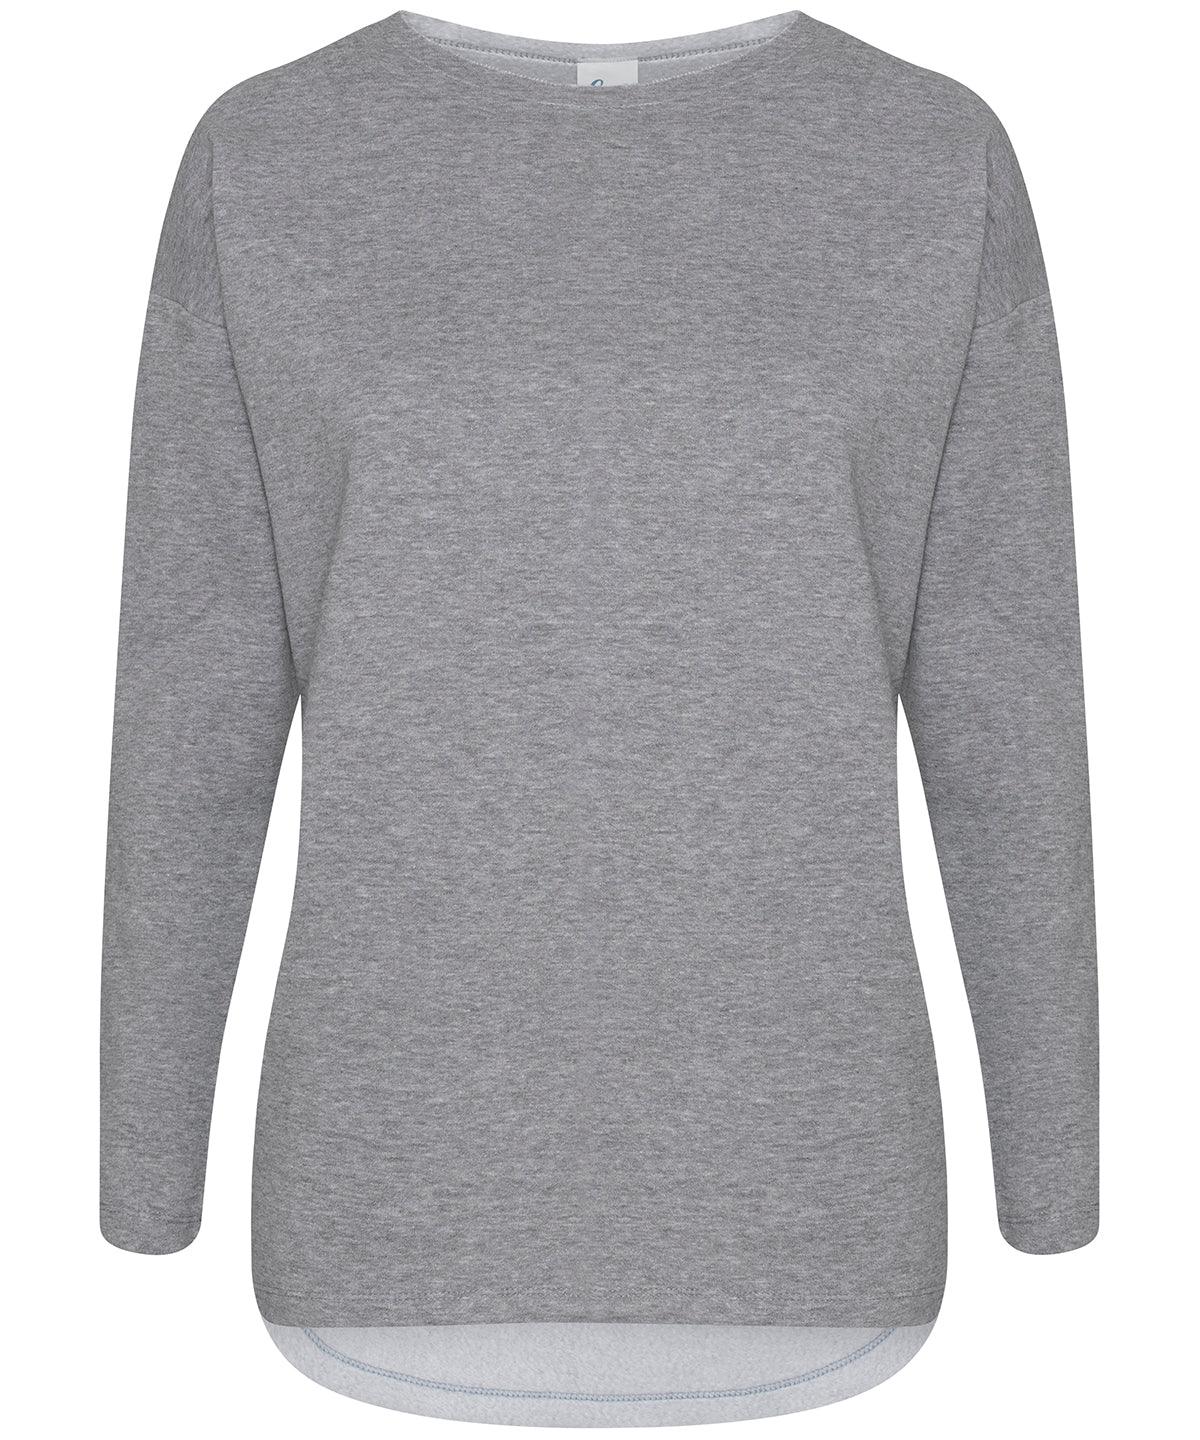 Heather Grey - Gals oversized sweatshirt Sweatshirts Comfy Co Lounge & Underwear, Sale, Sweatshirts Schoolwear Centres